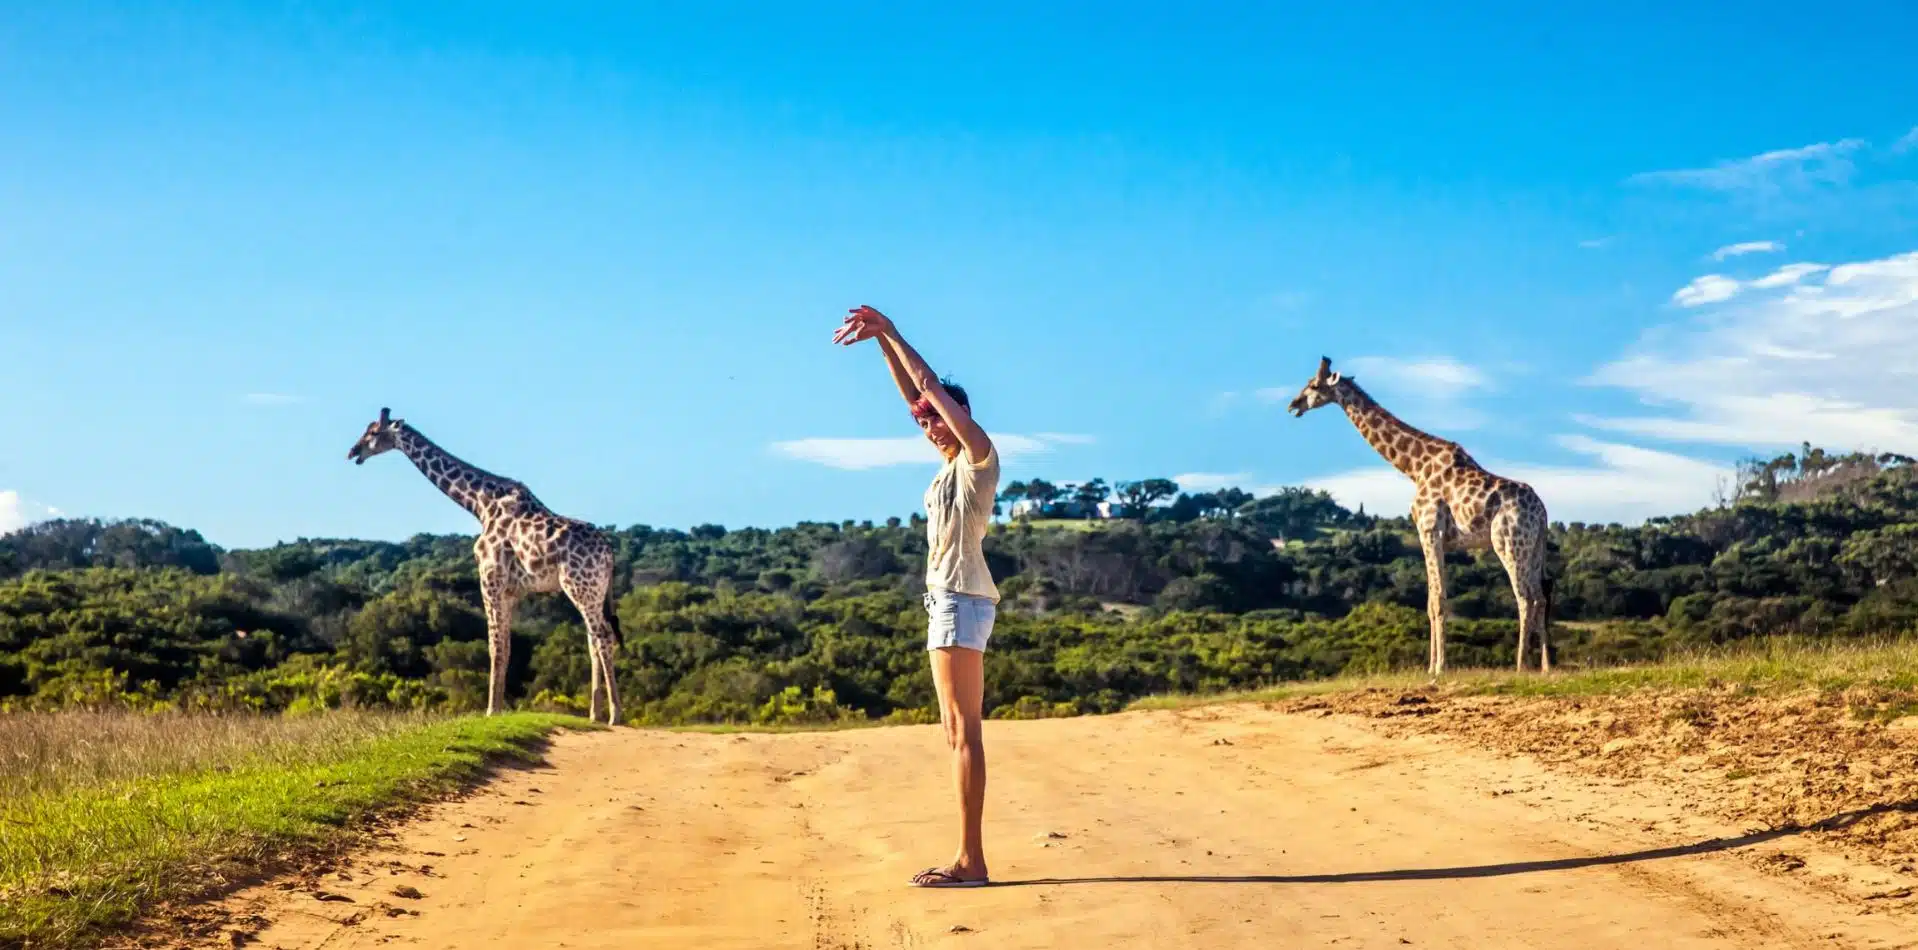 South Africa, woman on safari with giraffes